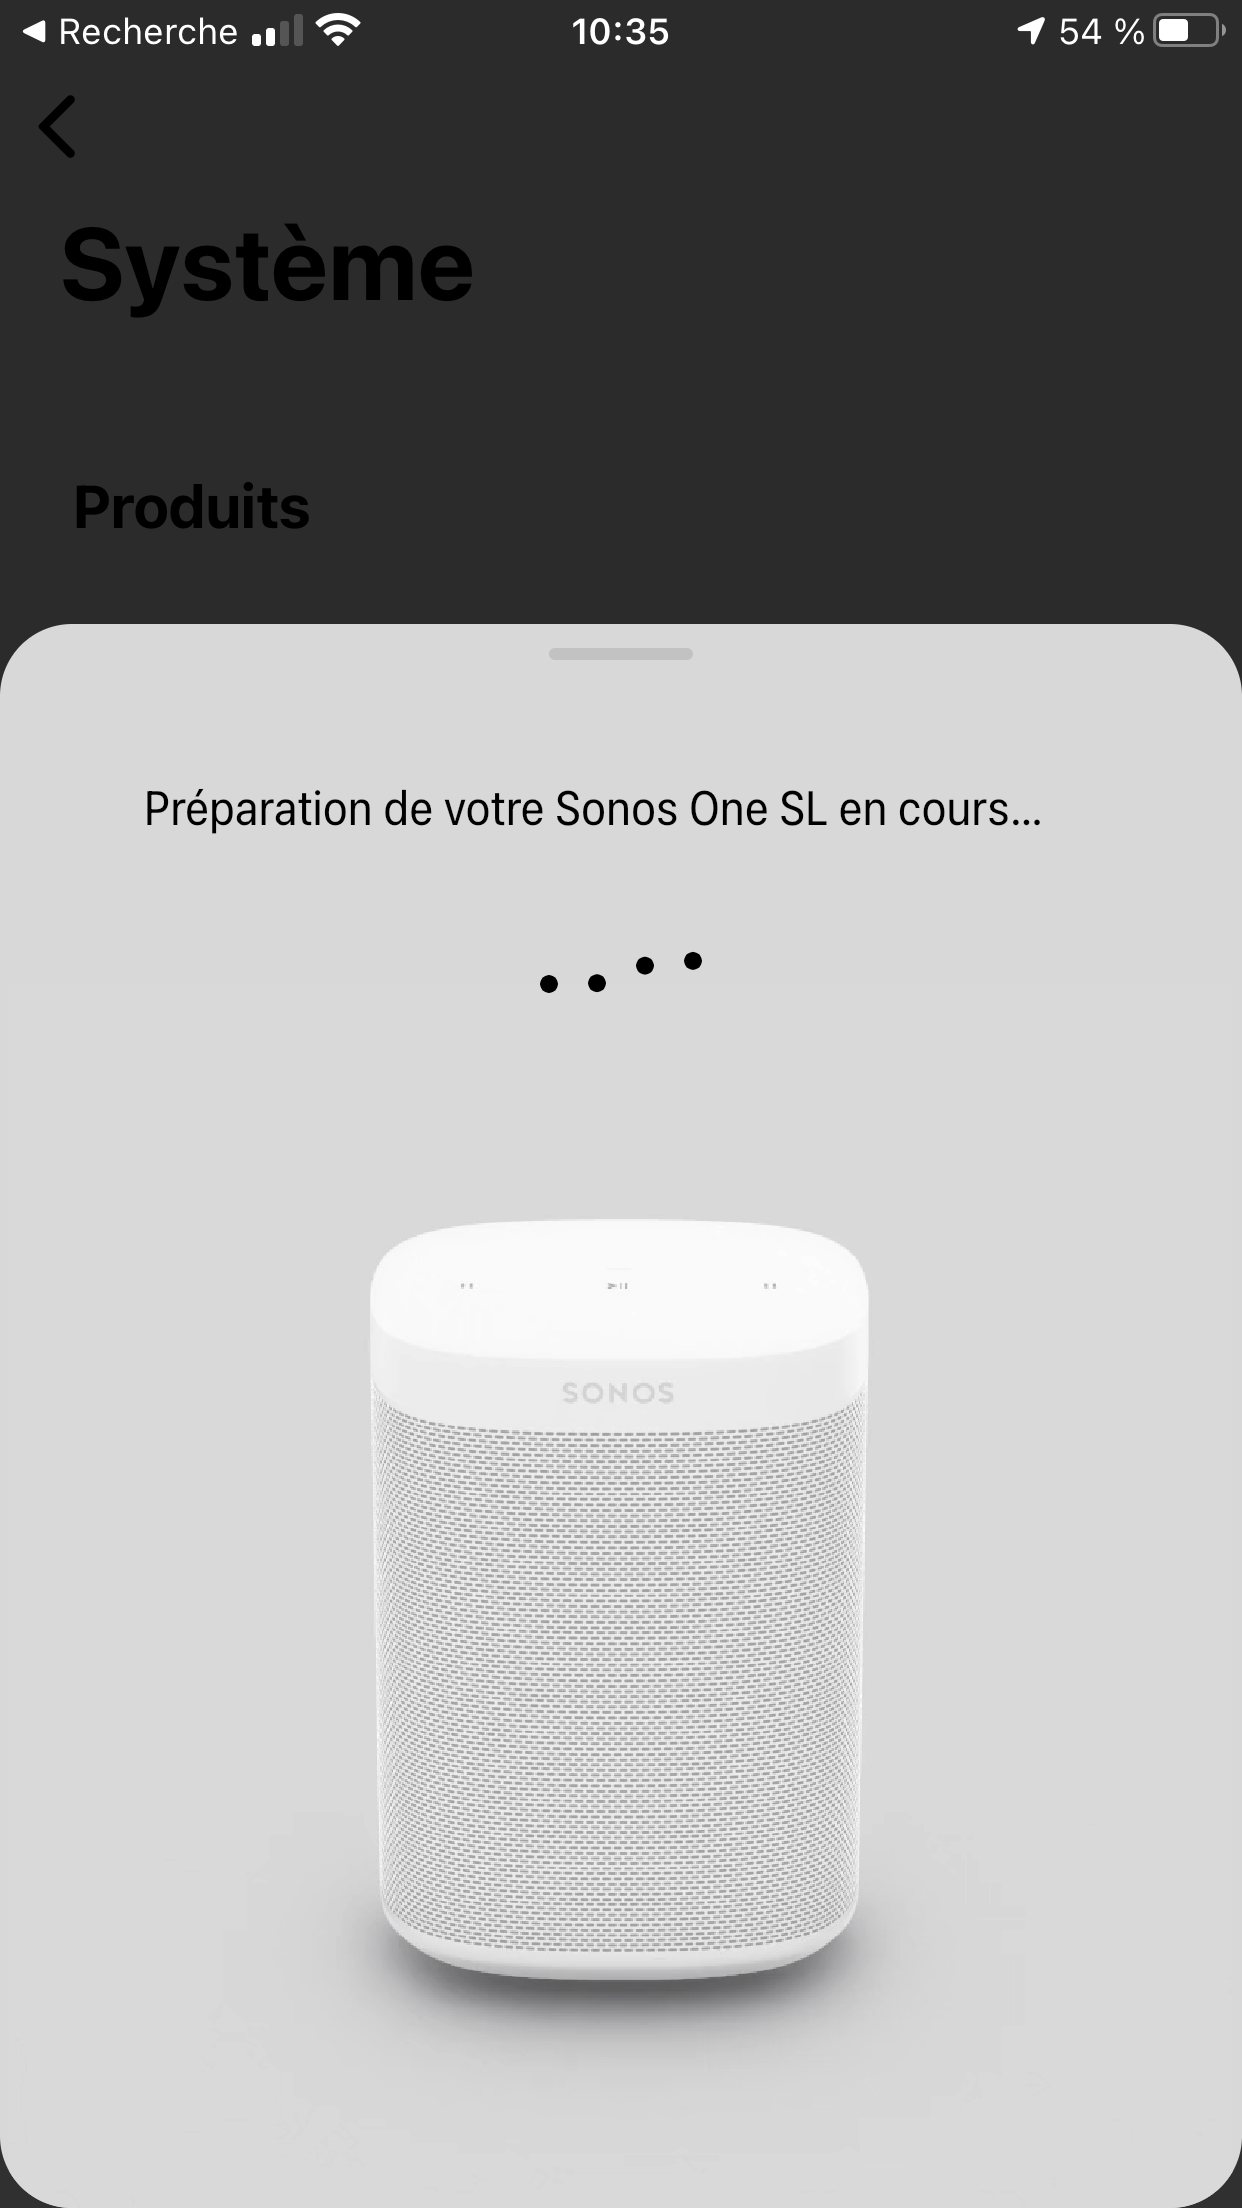 Sonos One SL préparation